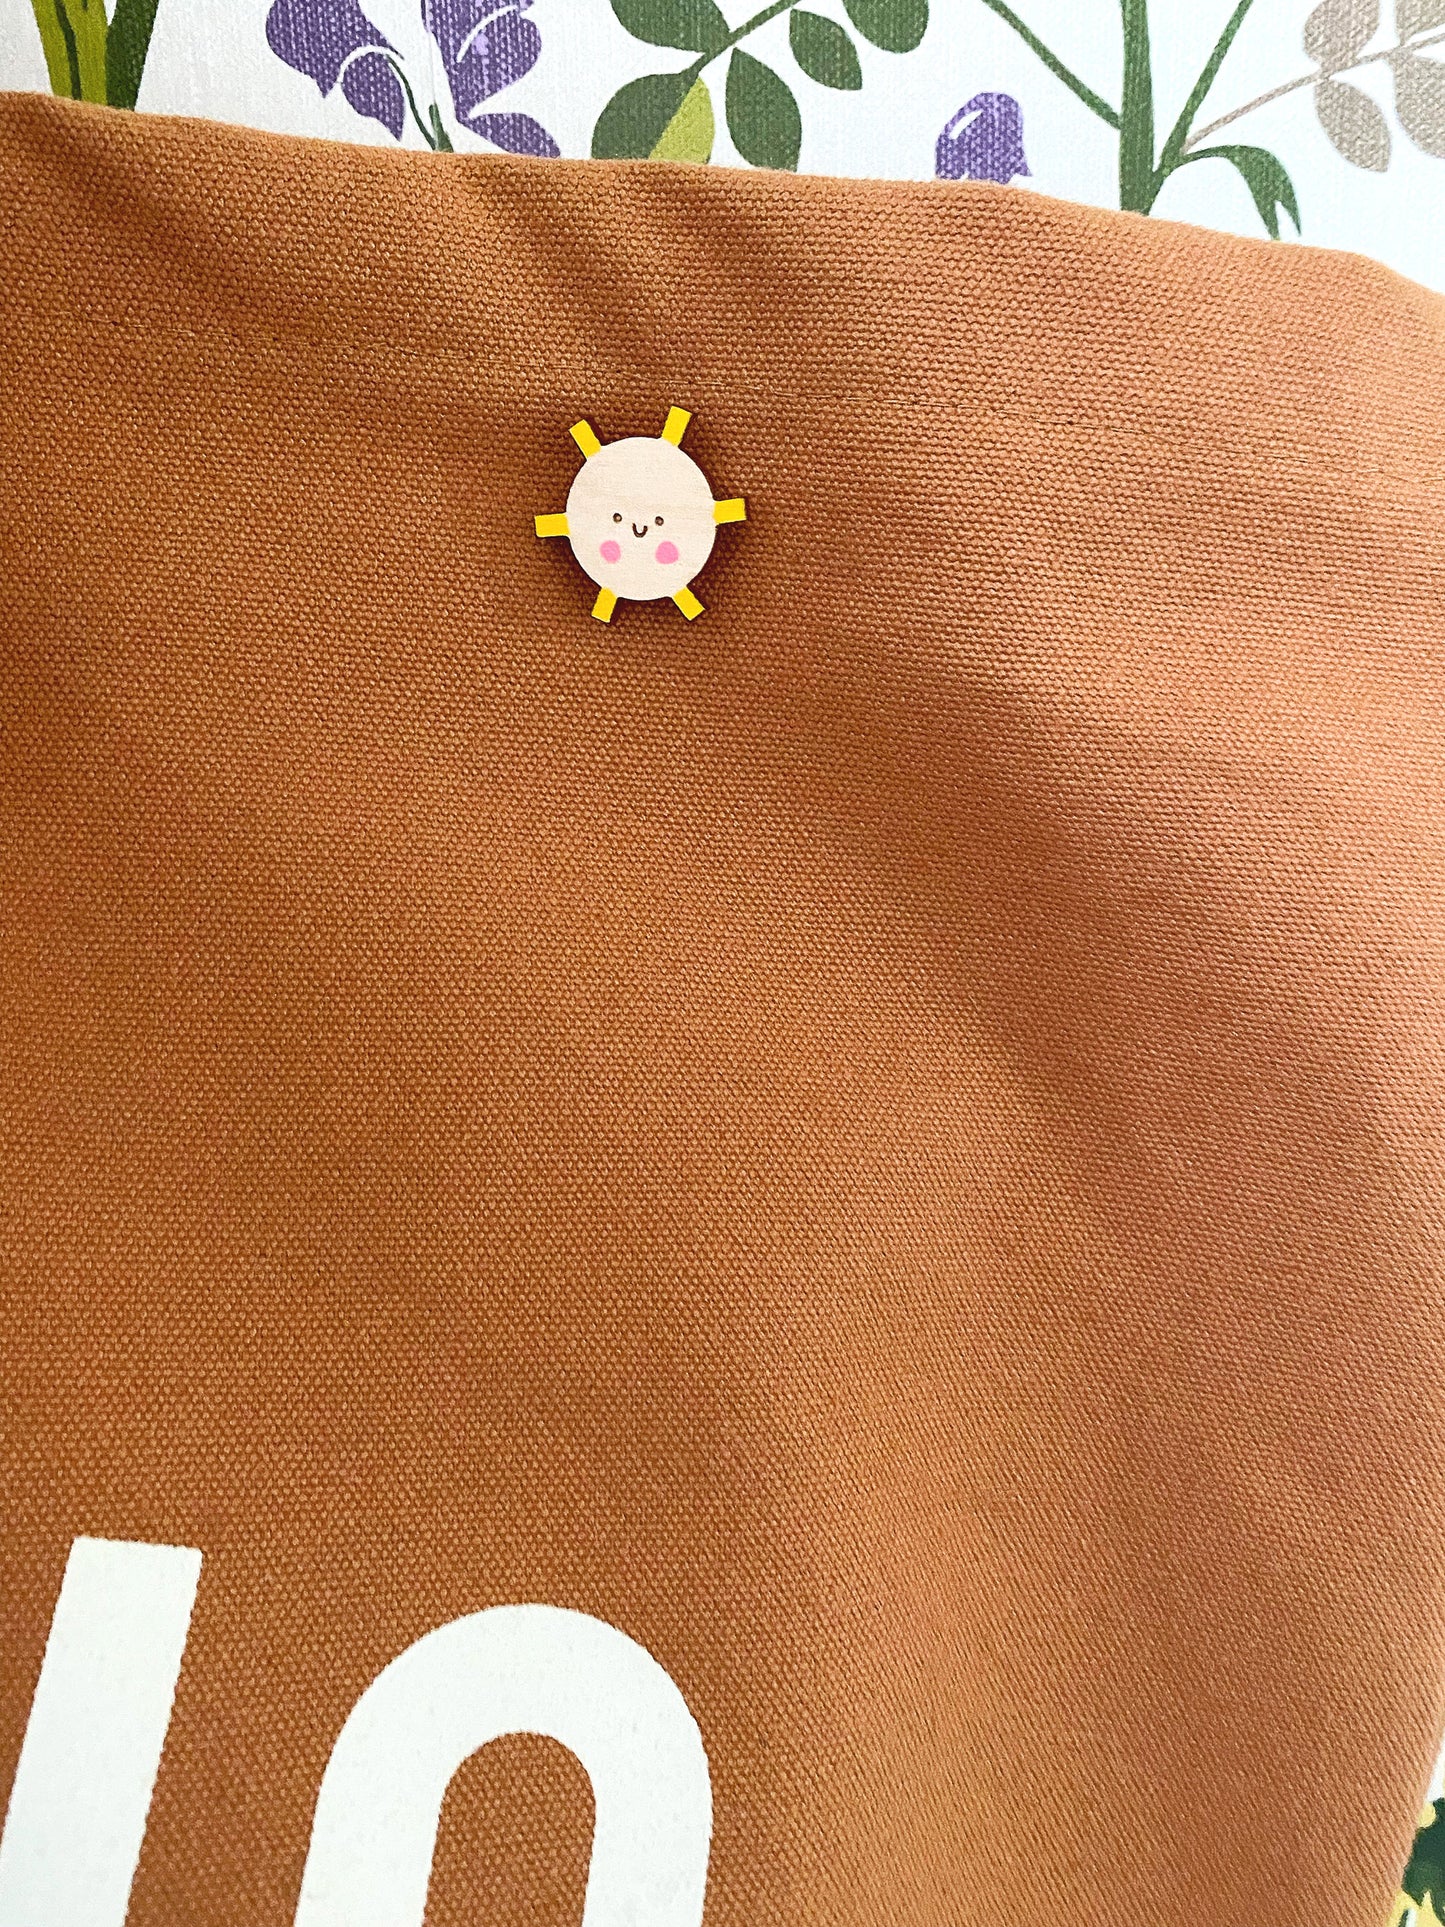 Smiley sunshine pin badge